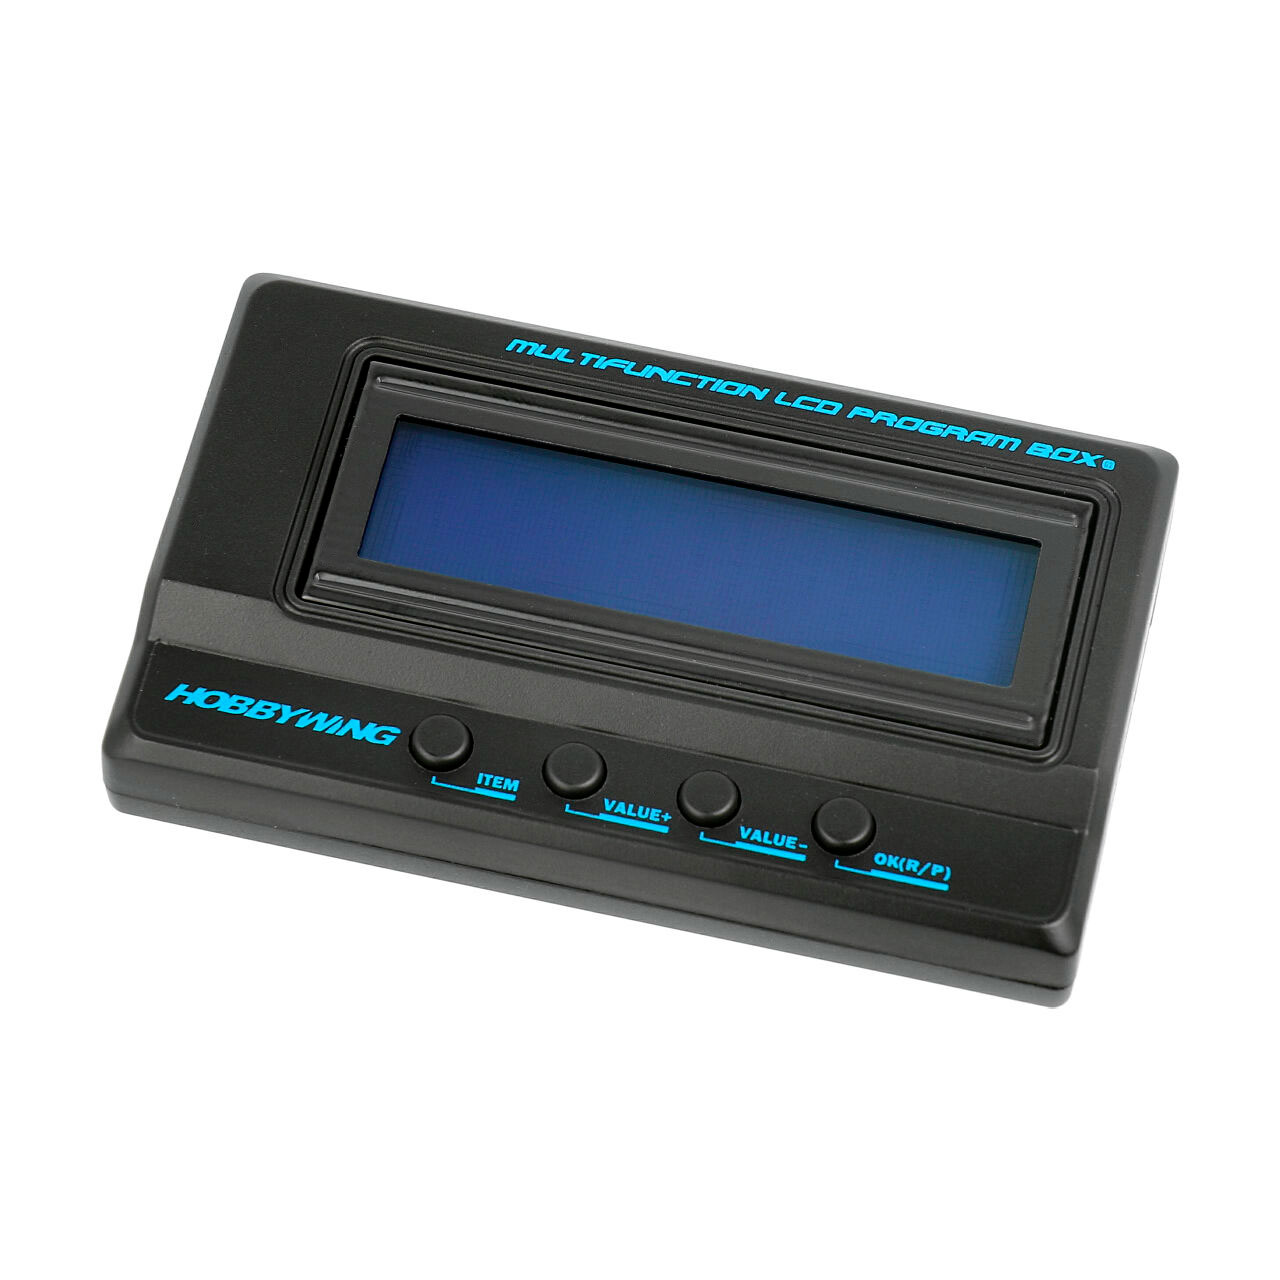 Hobbywing 3in1 ESC Speed Controller Program Box for sale online